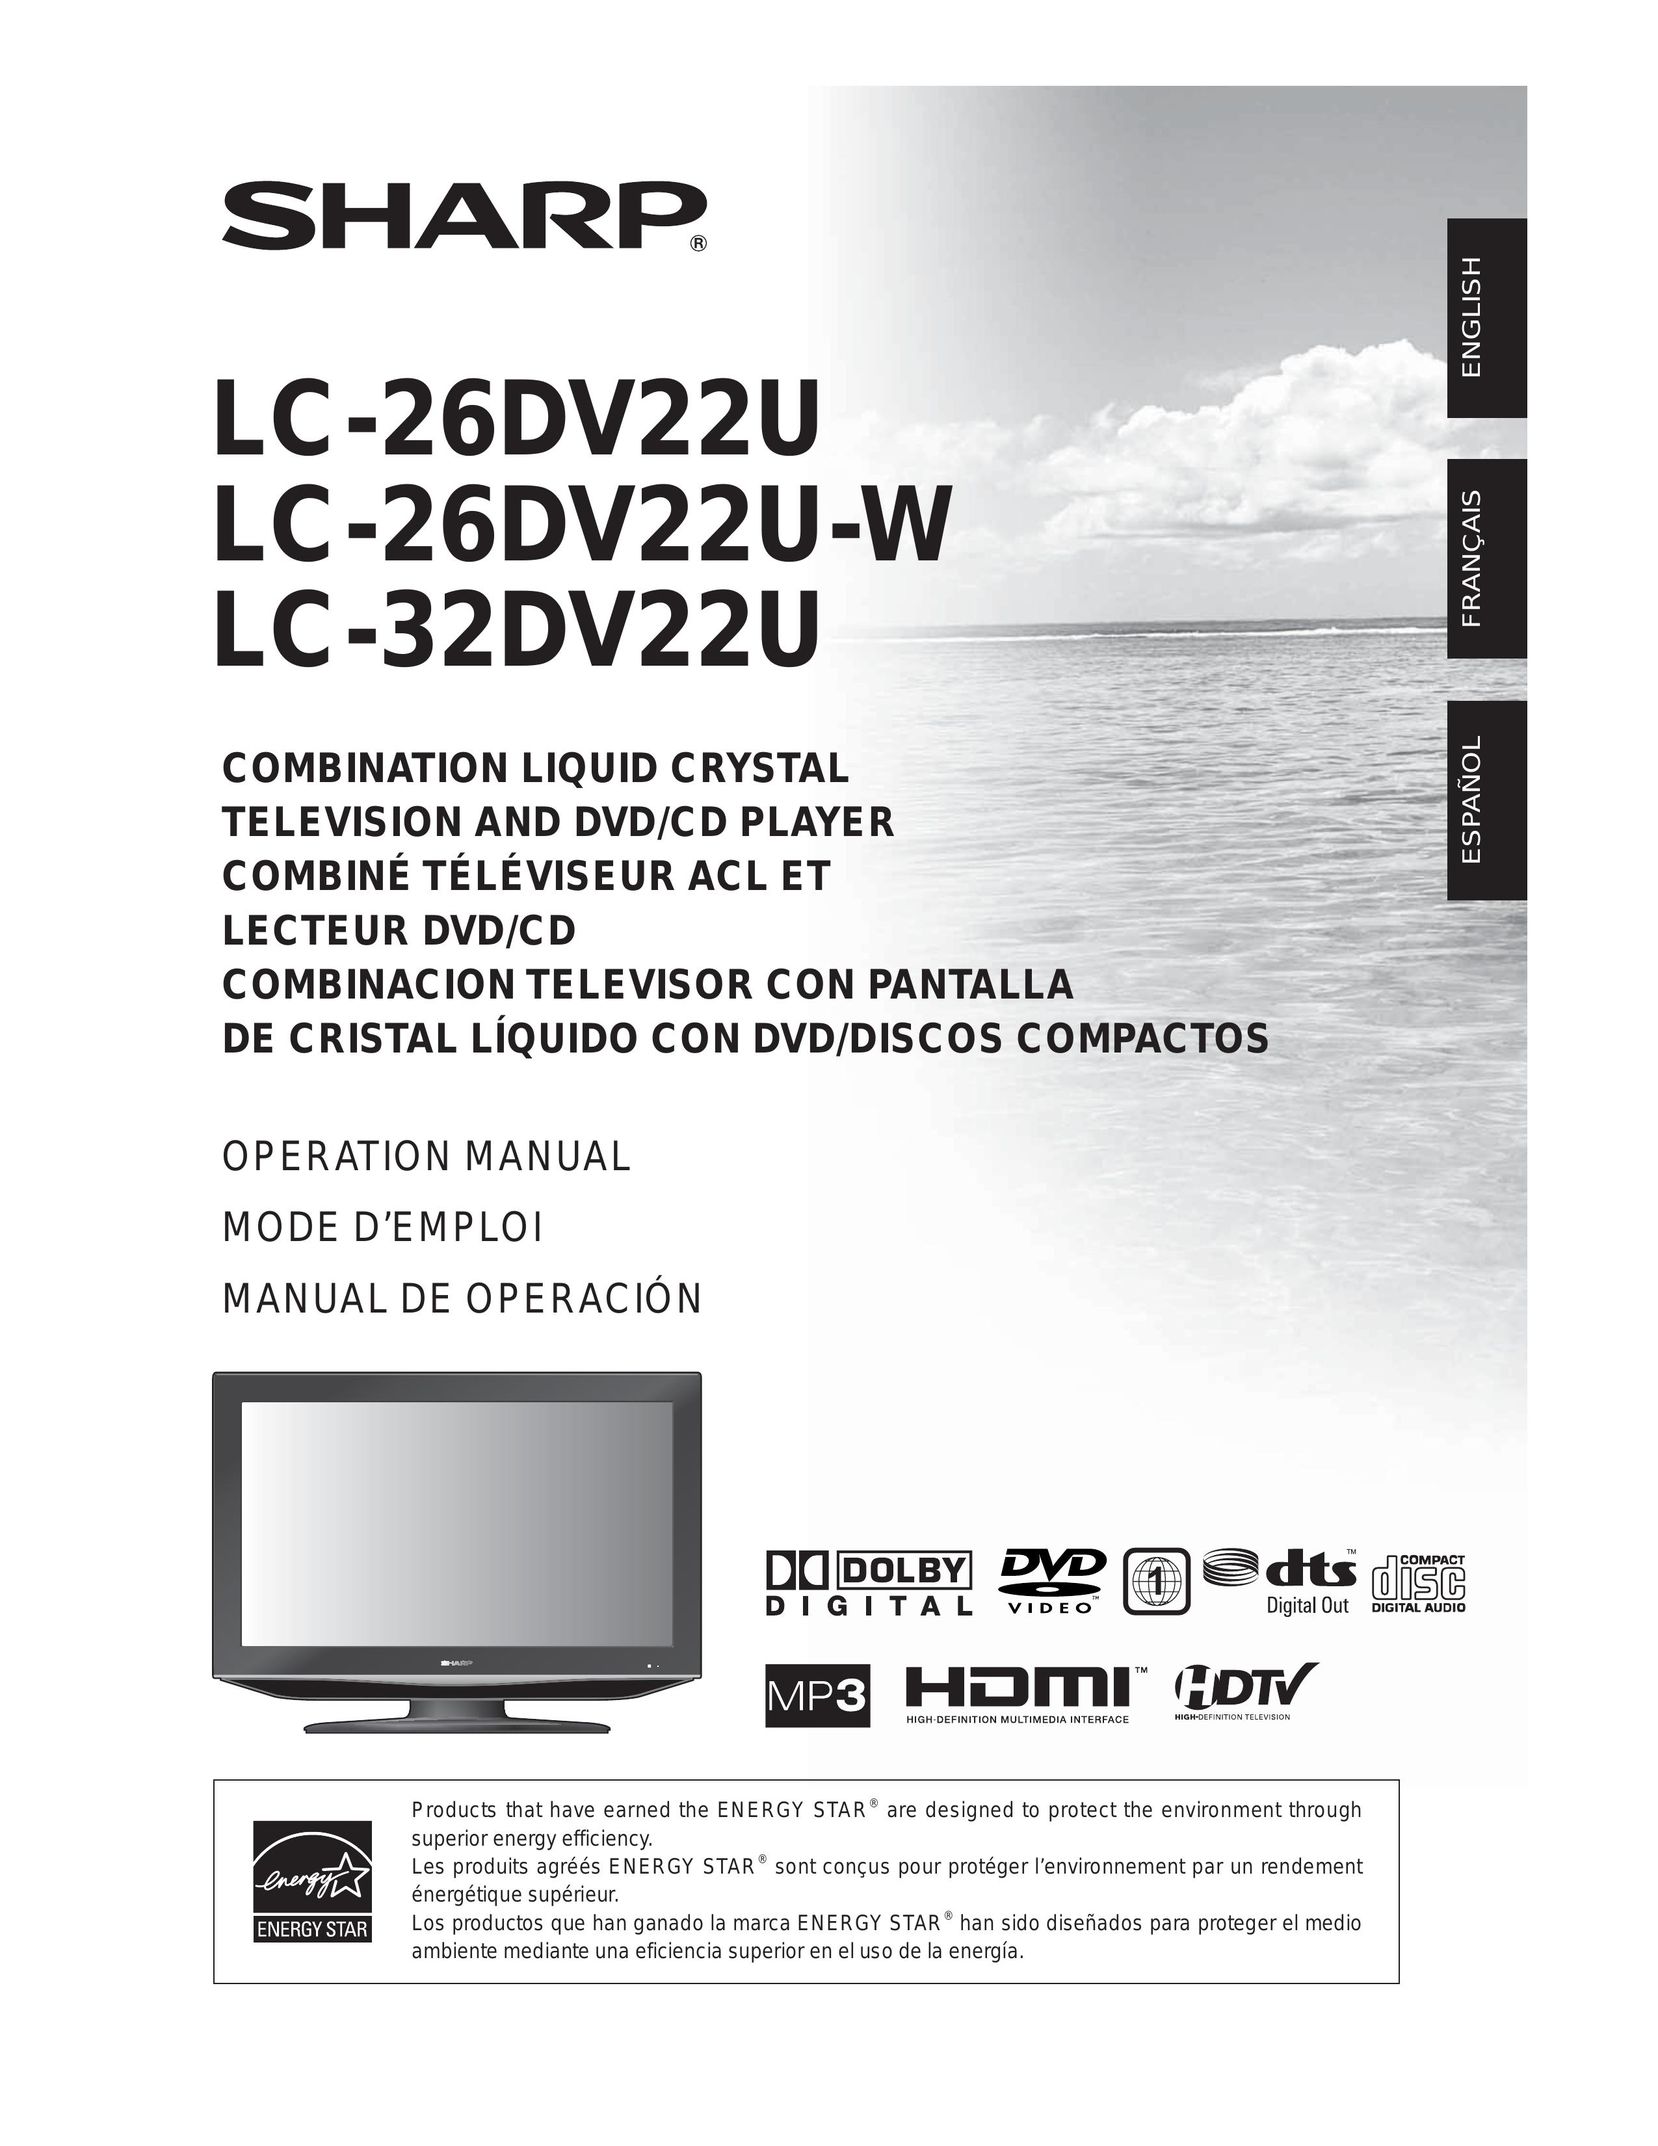 Sharp LC-32DV22U TV DVD Combo User Manual